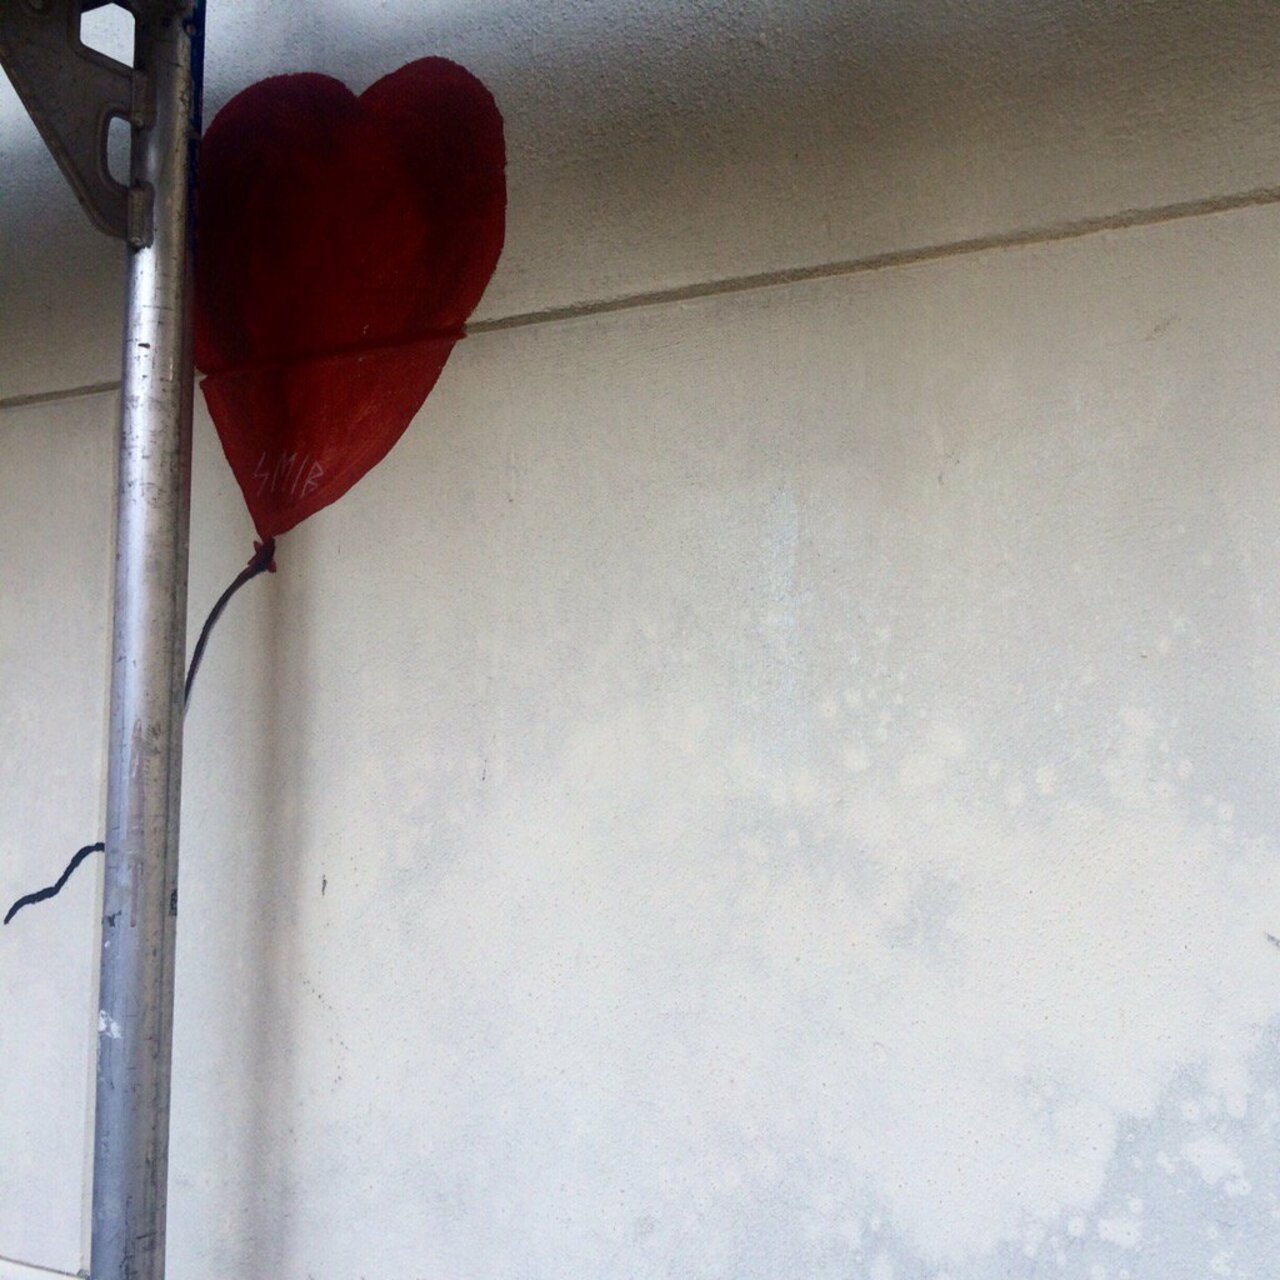 RT @OneUrbanLove: Free as a (love) balloon. 

#love #lovemanifest #artlove #graffiti #Urban #UrbanArt #streetart #bansky #lovemanifest https://t.co/eqcjm56TzB